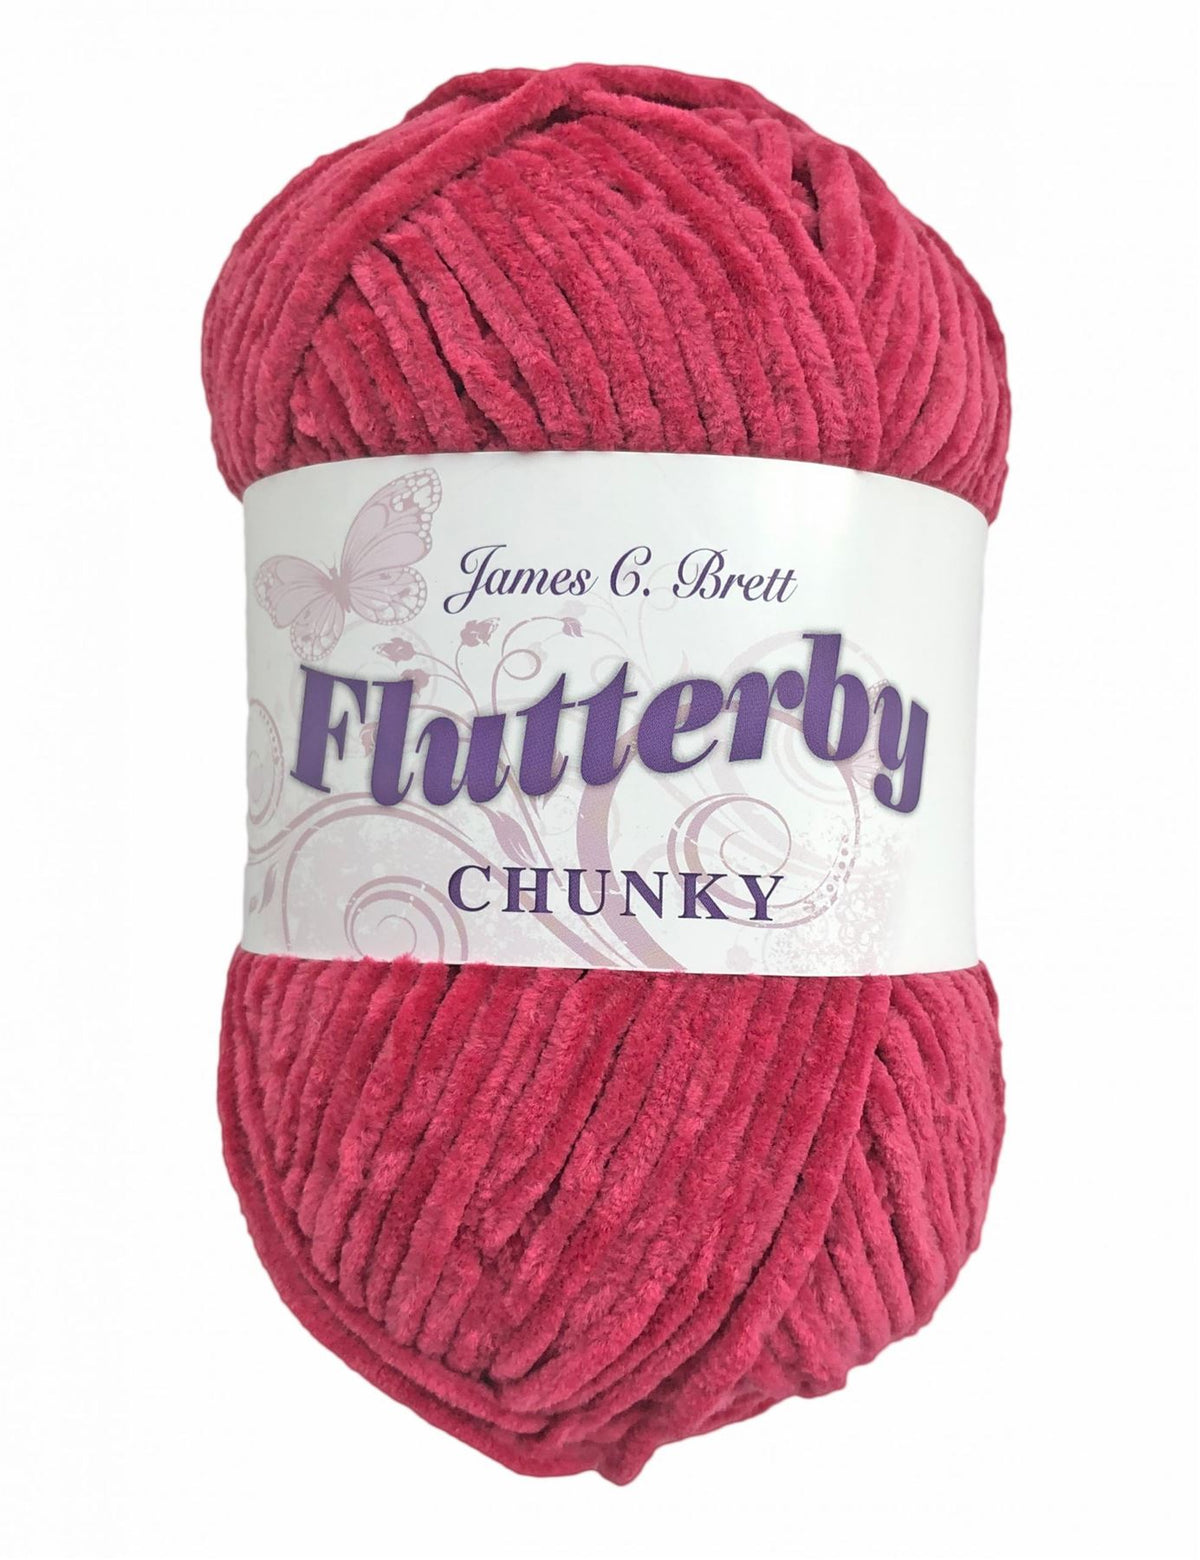 James C Brett Flutterby Chunky (B45) chenille yarn - 100g